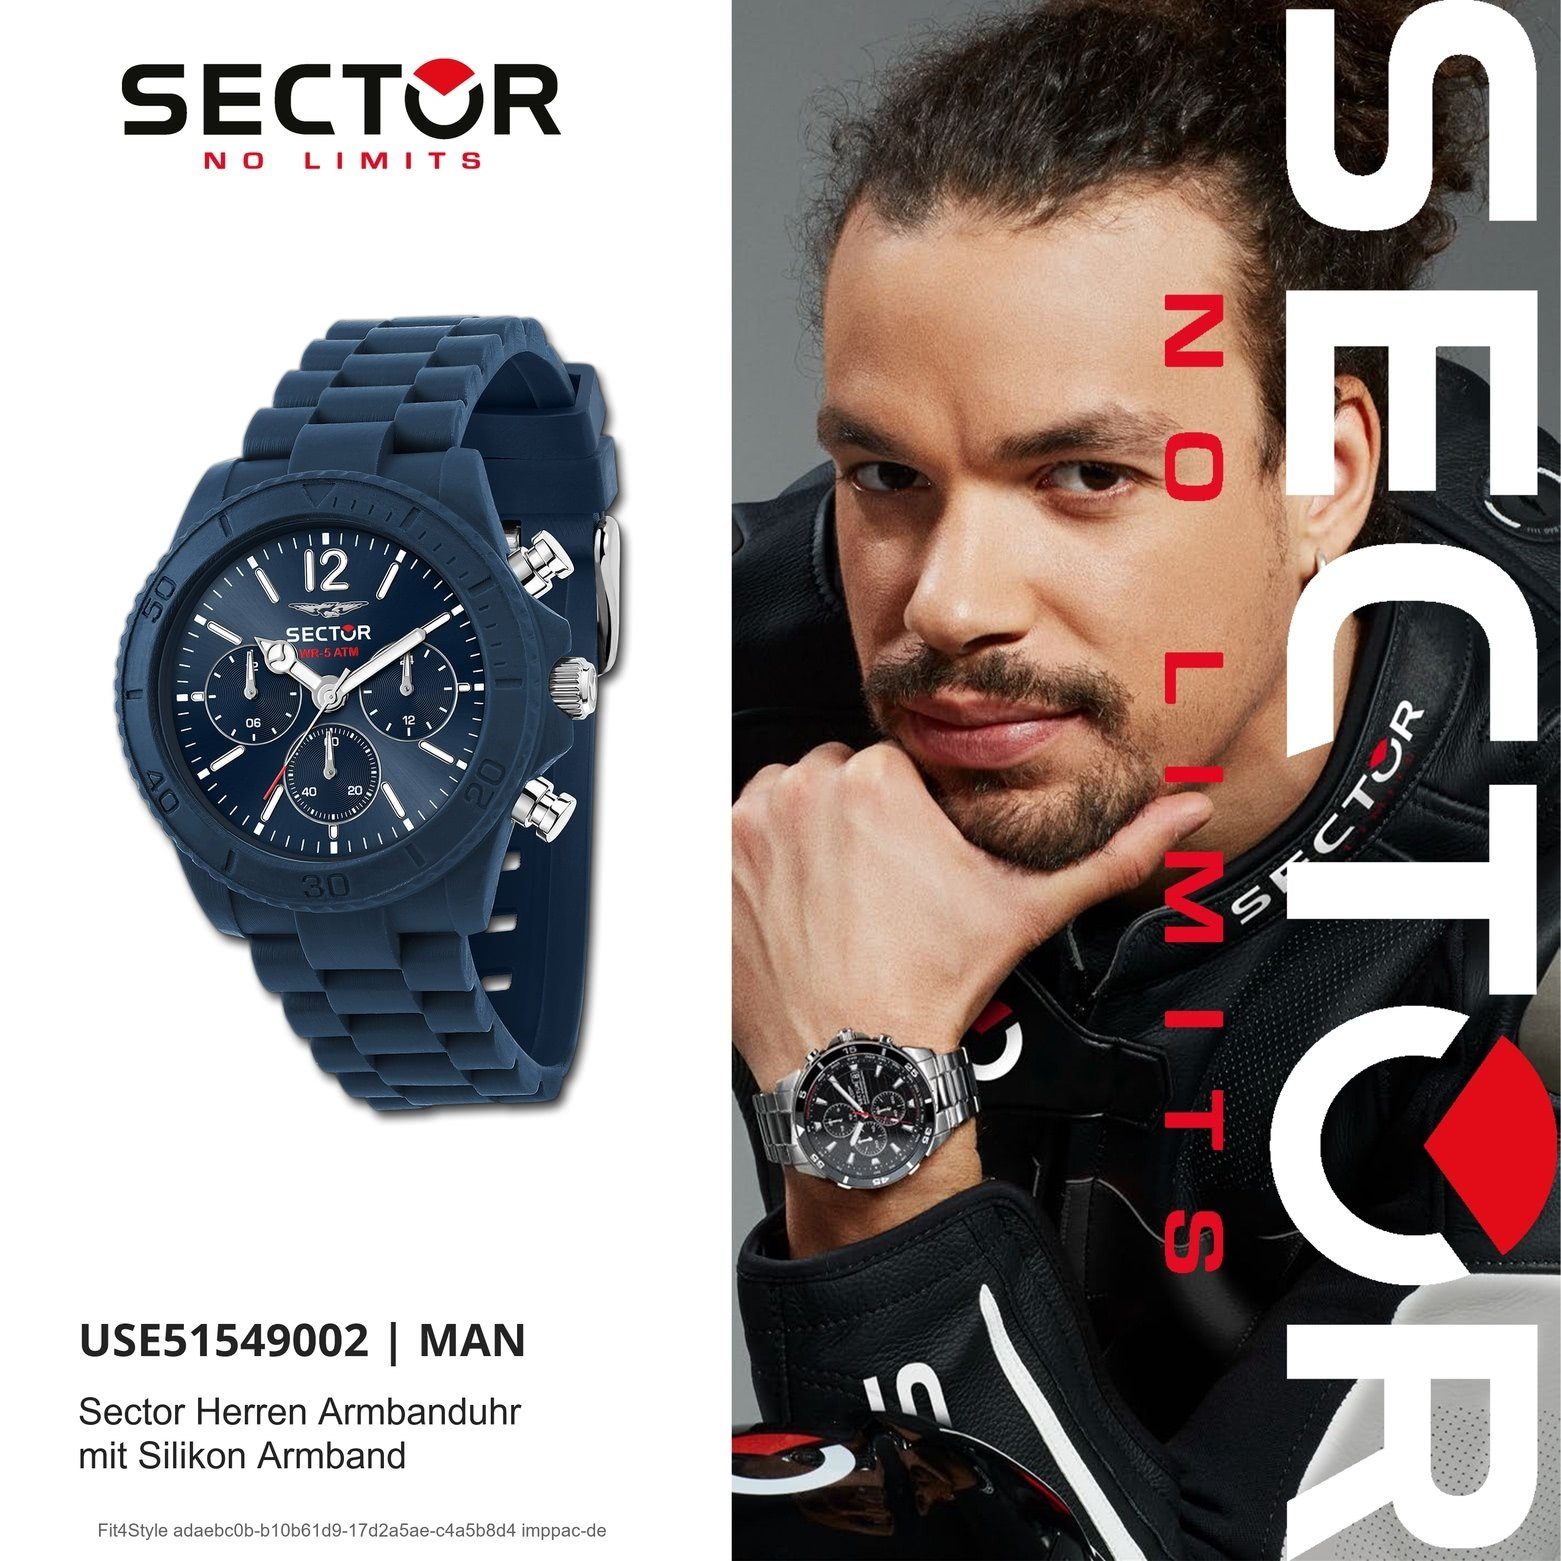 Sector Multifunktionsuhr Armbanduhr Silikonarmband (ca. Multifunktion, Armbanduhr Herren Fashion Herren groß Sector blau, 45mm), rund